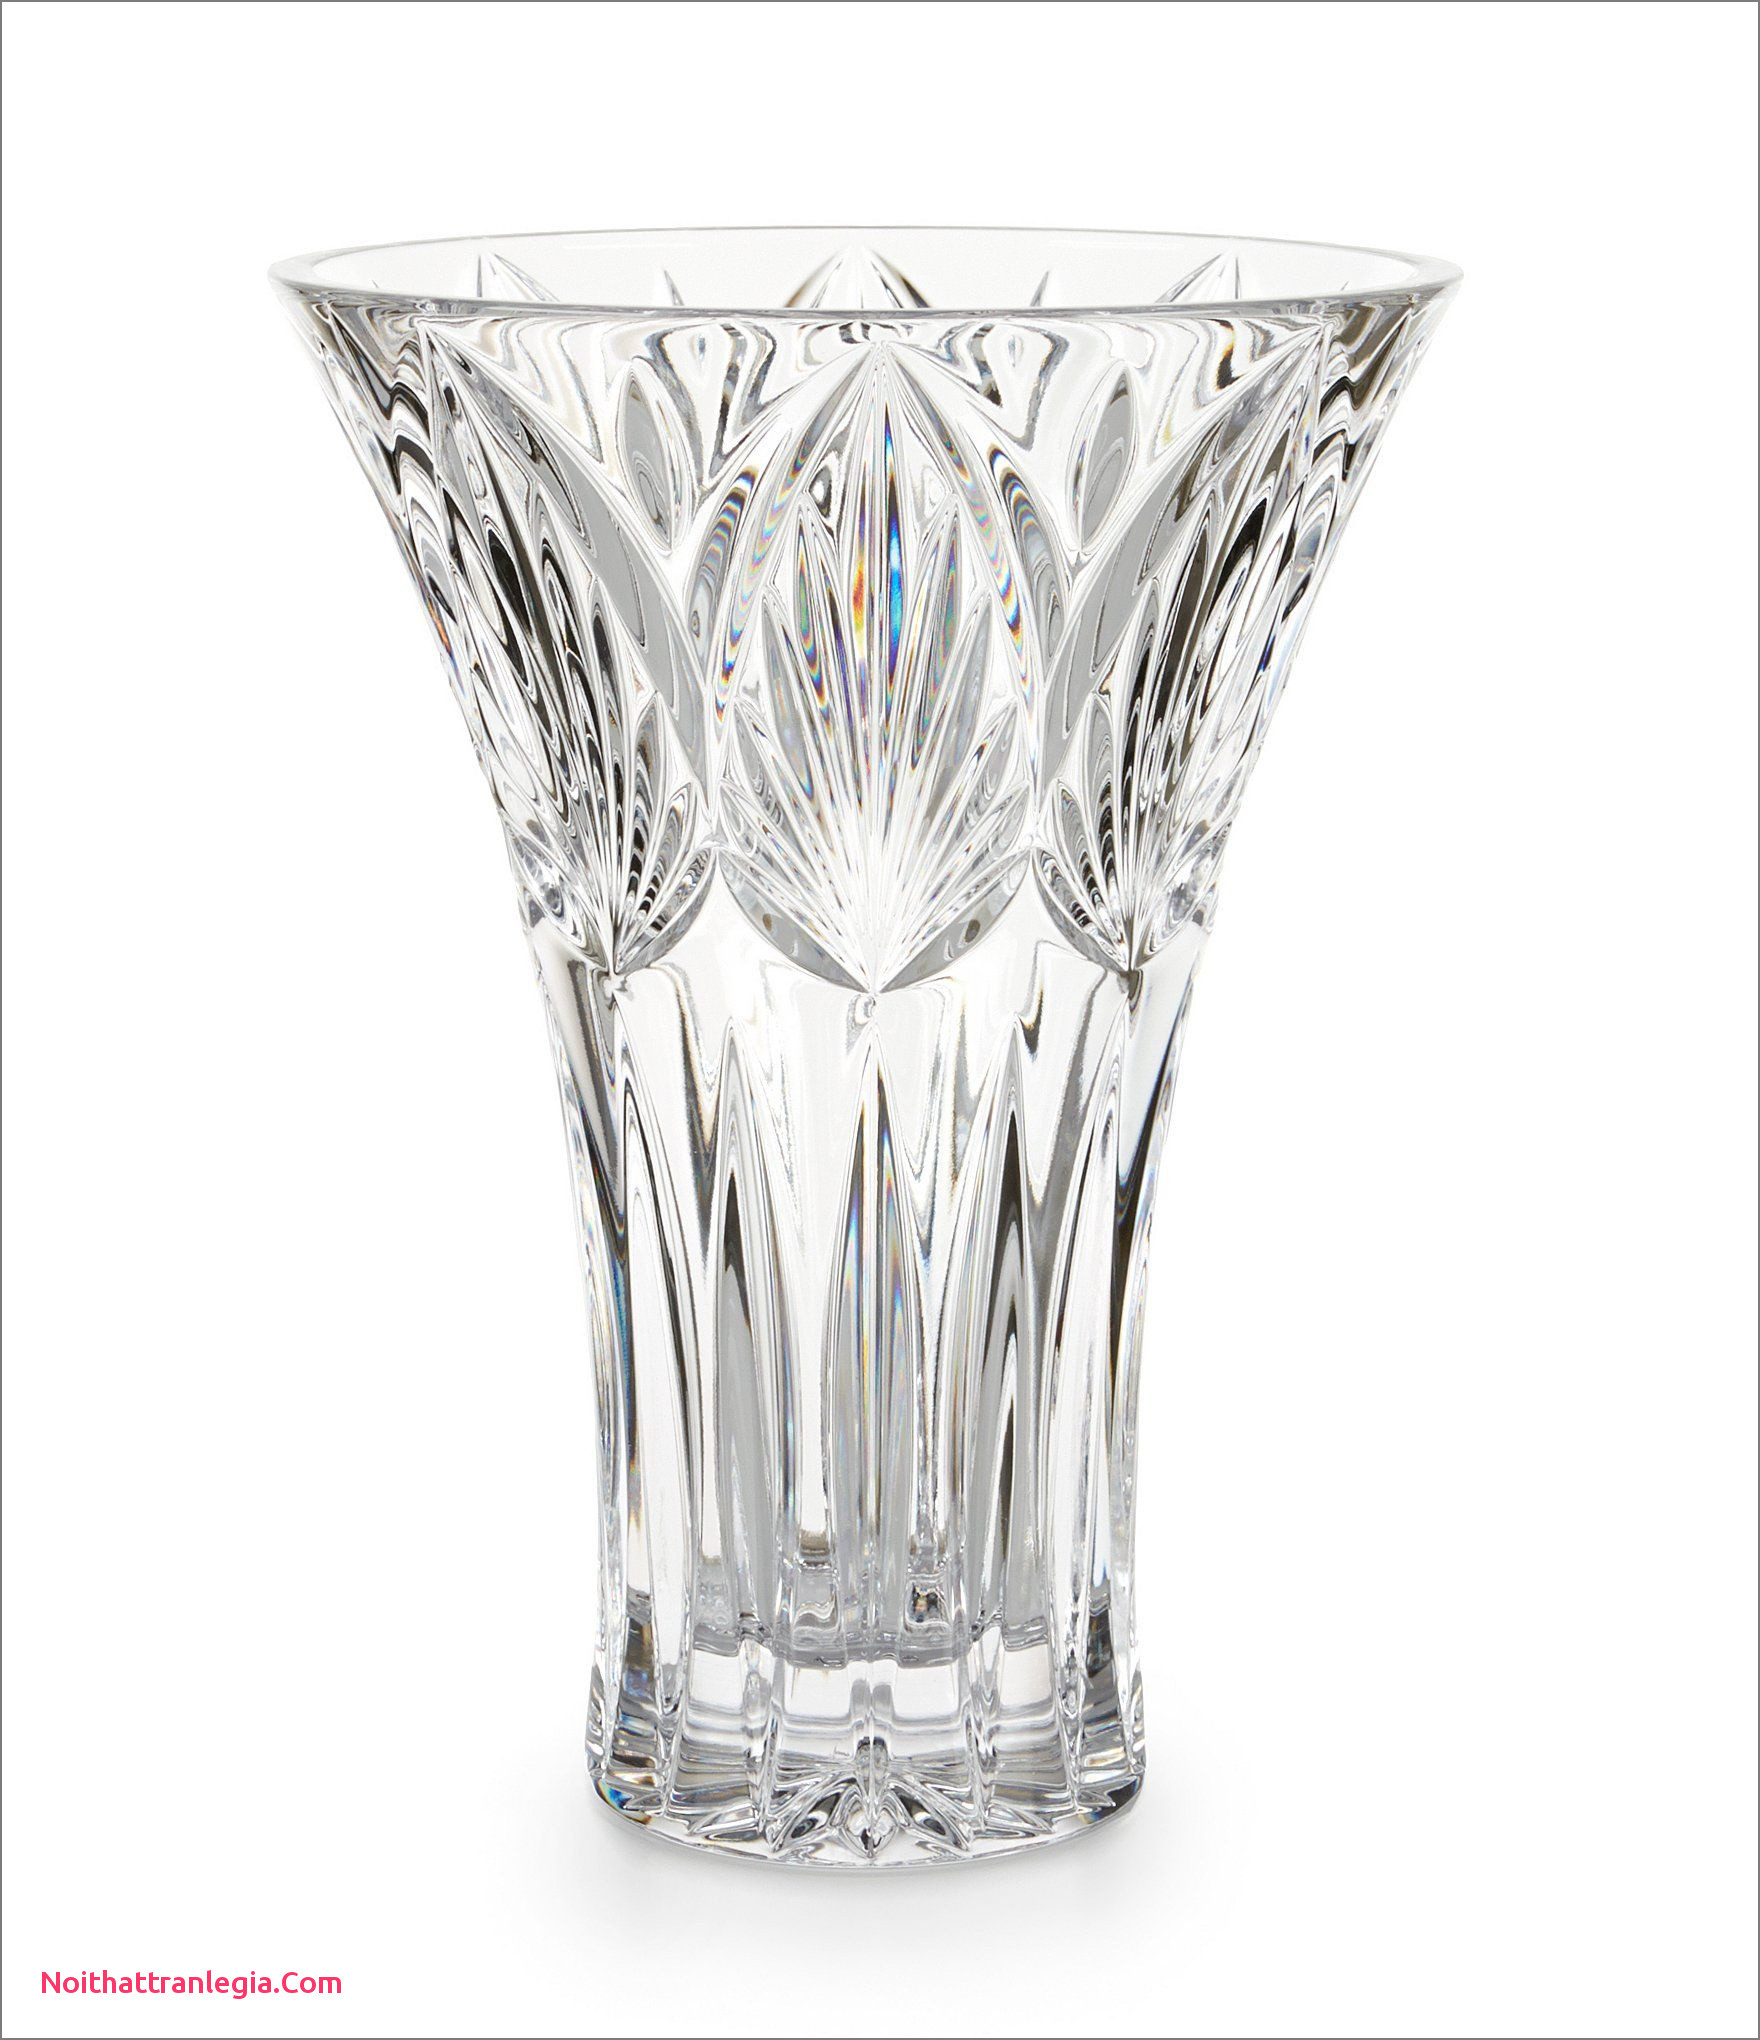 Square Crystal Vase Of 20 Large Waterford Crystal Vase Noithattranlegia Vases Design with Large Waterford Crystal Vase Best Of Waterford Westbridge Crystal Vase Of Large Waterford Crystal Vase